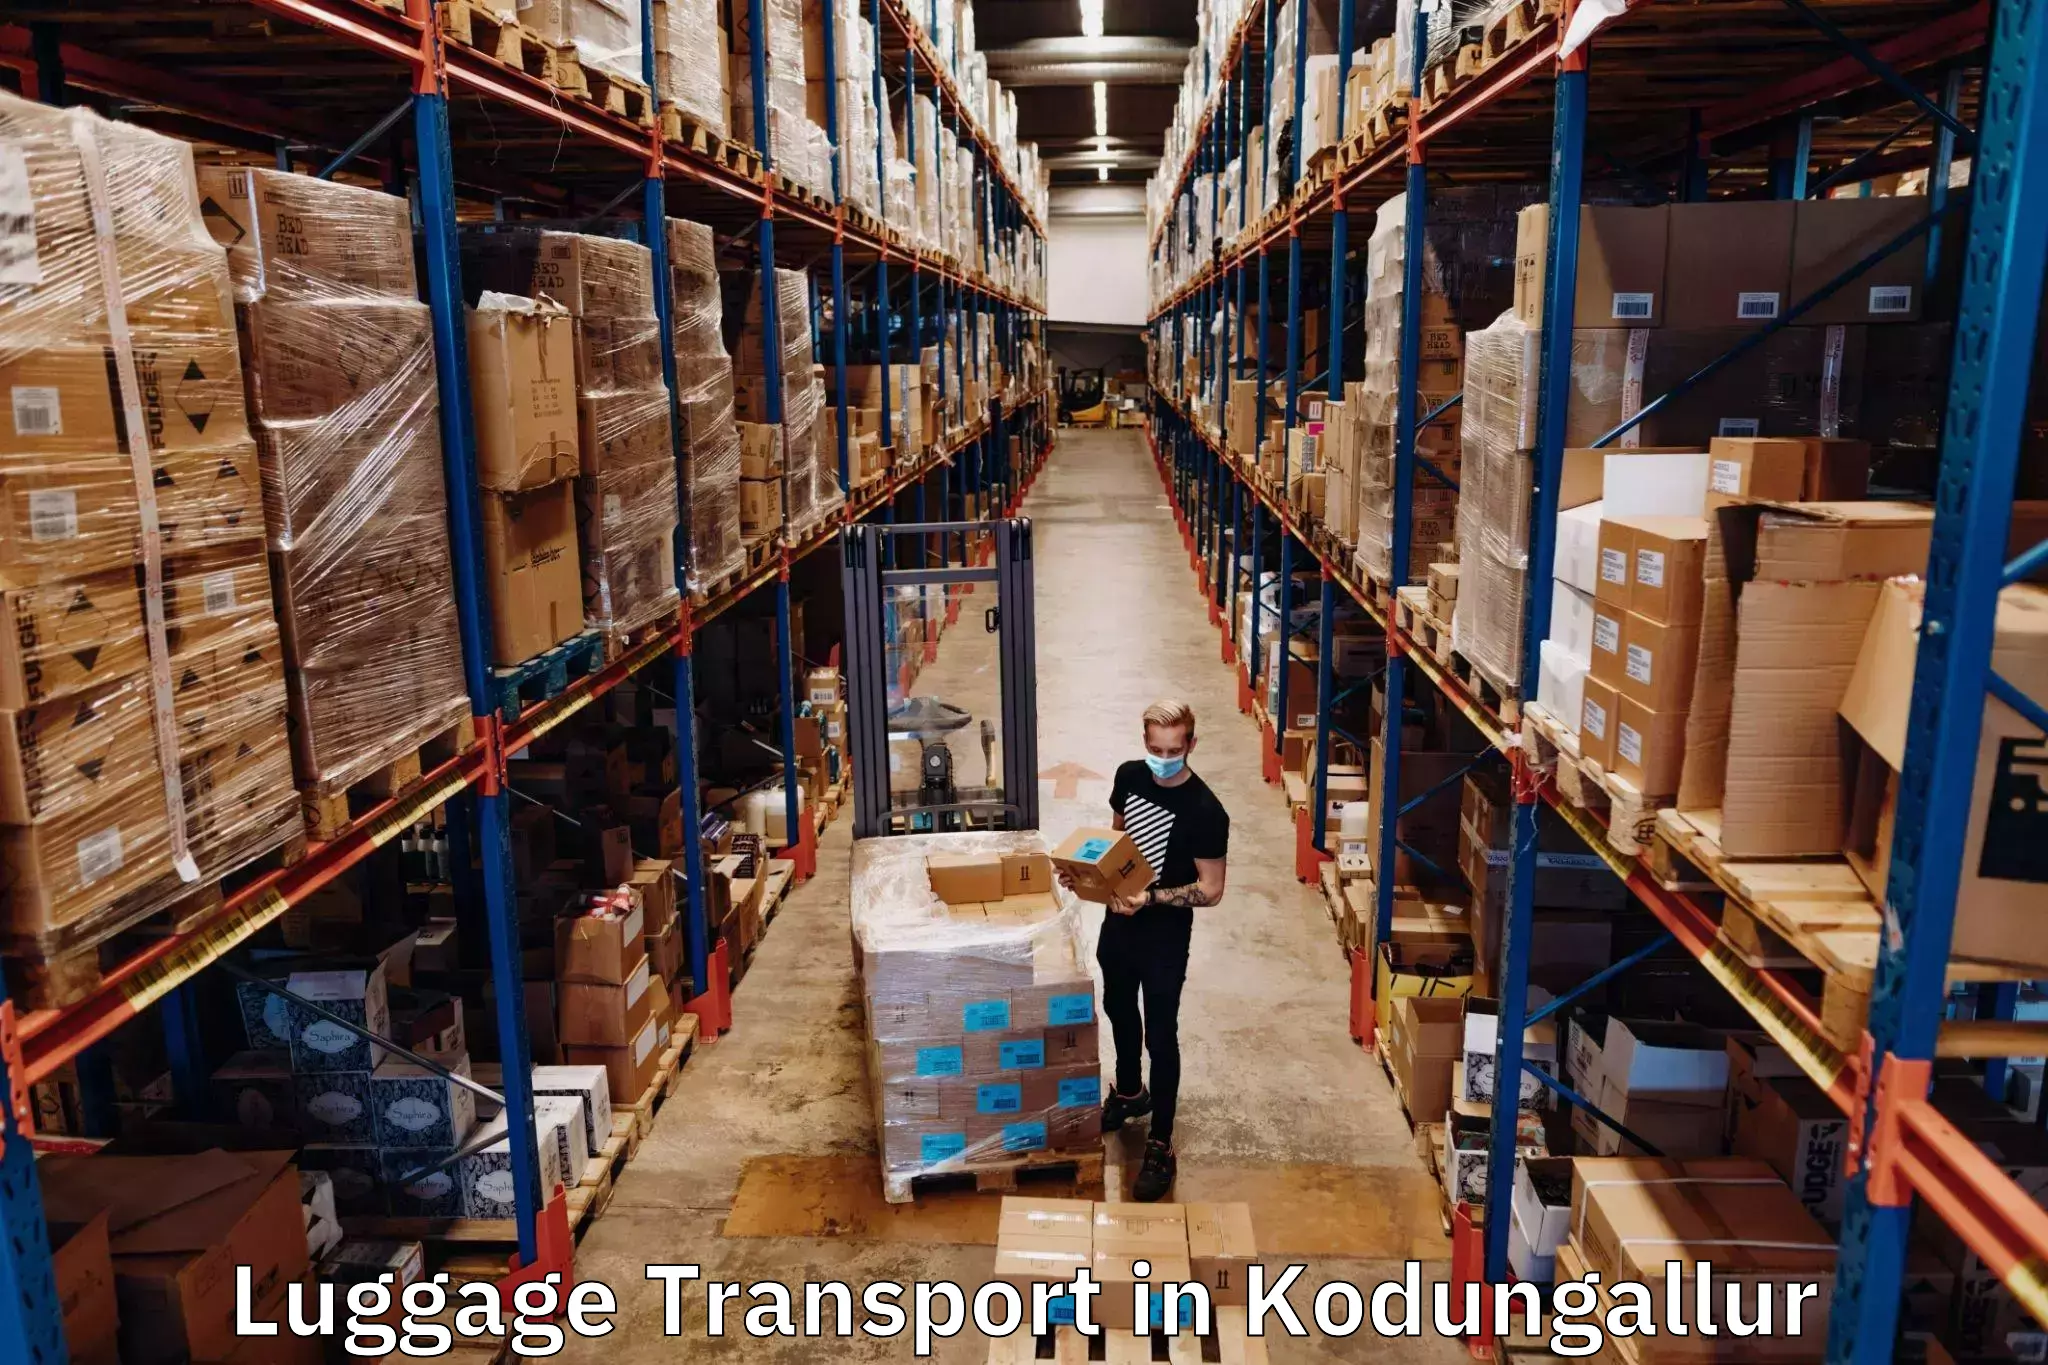 Luggage transport company in Kodungallur